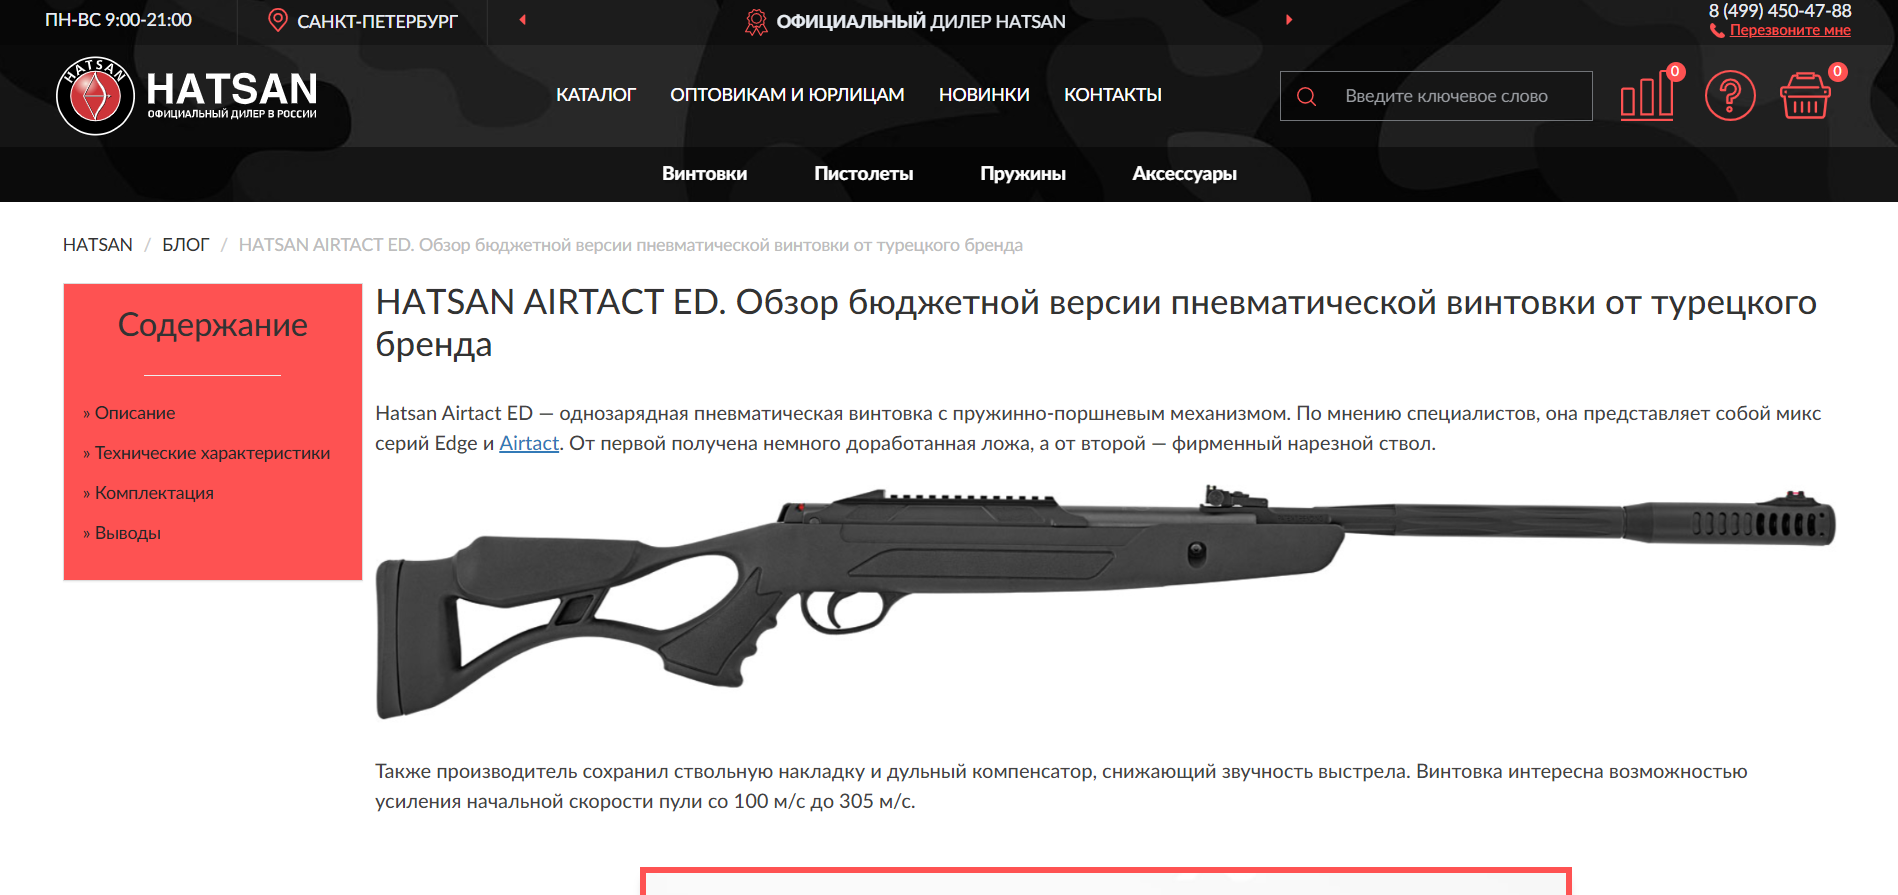 HATSAN AIRTACT ED. Обзор бюджетной версии пневматической винтовки от турецкого бренда